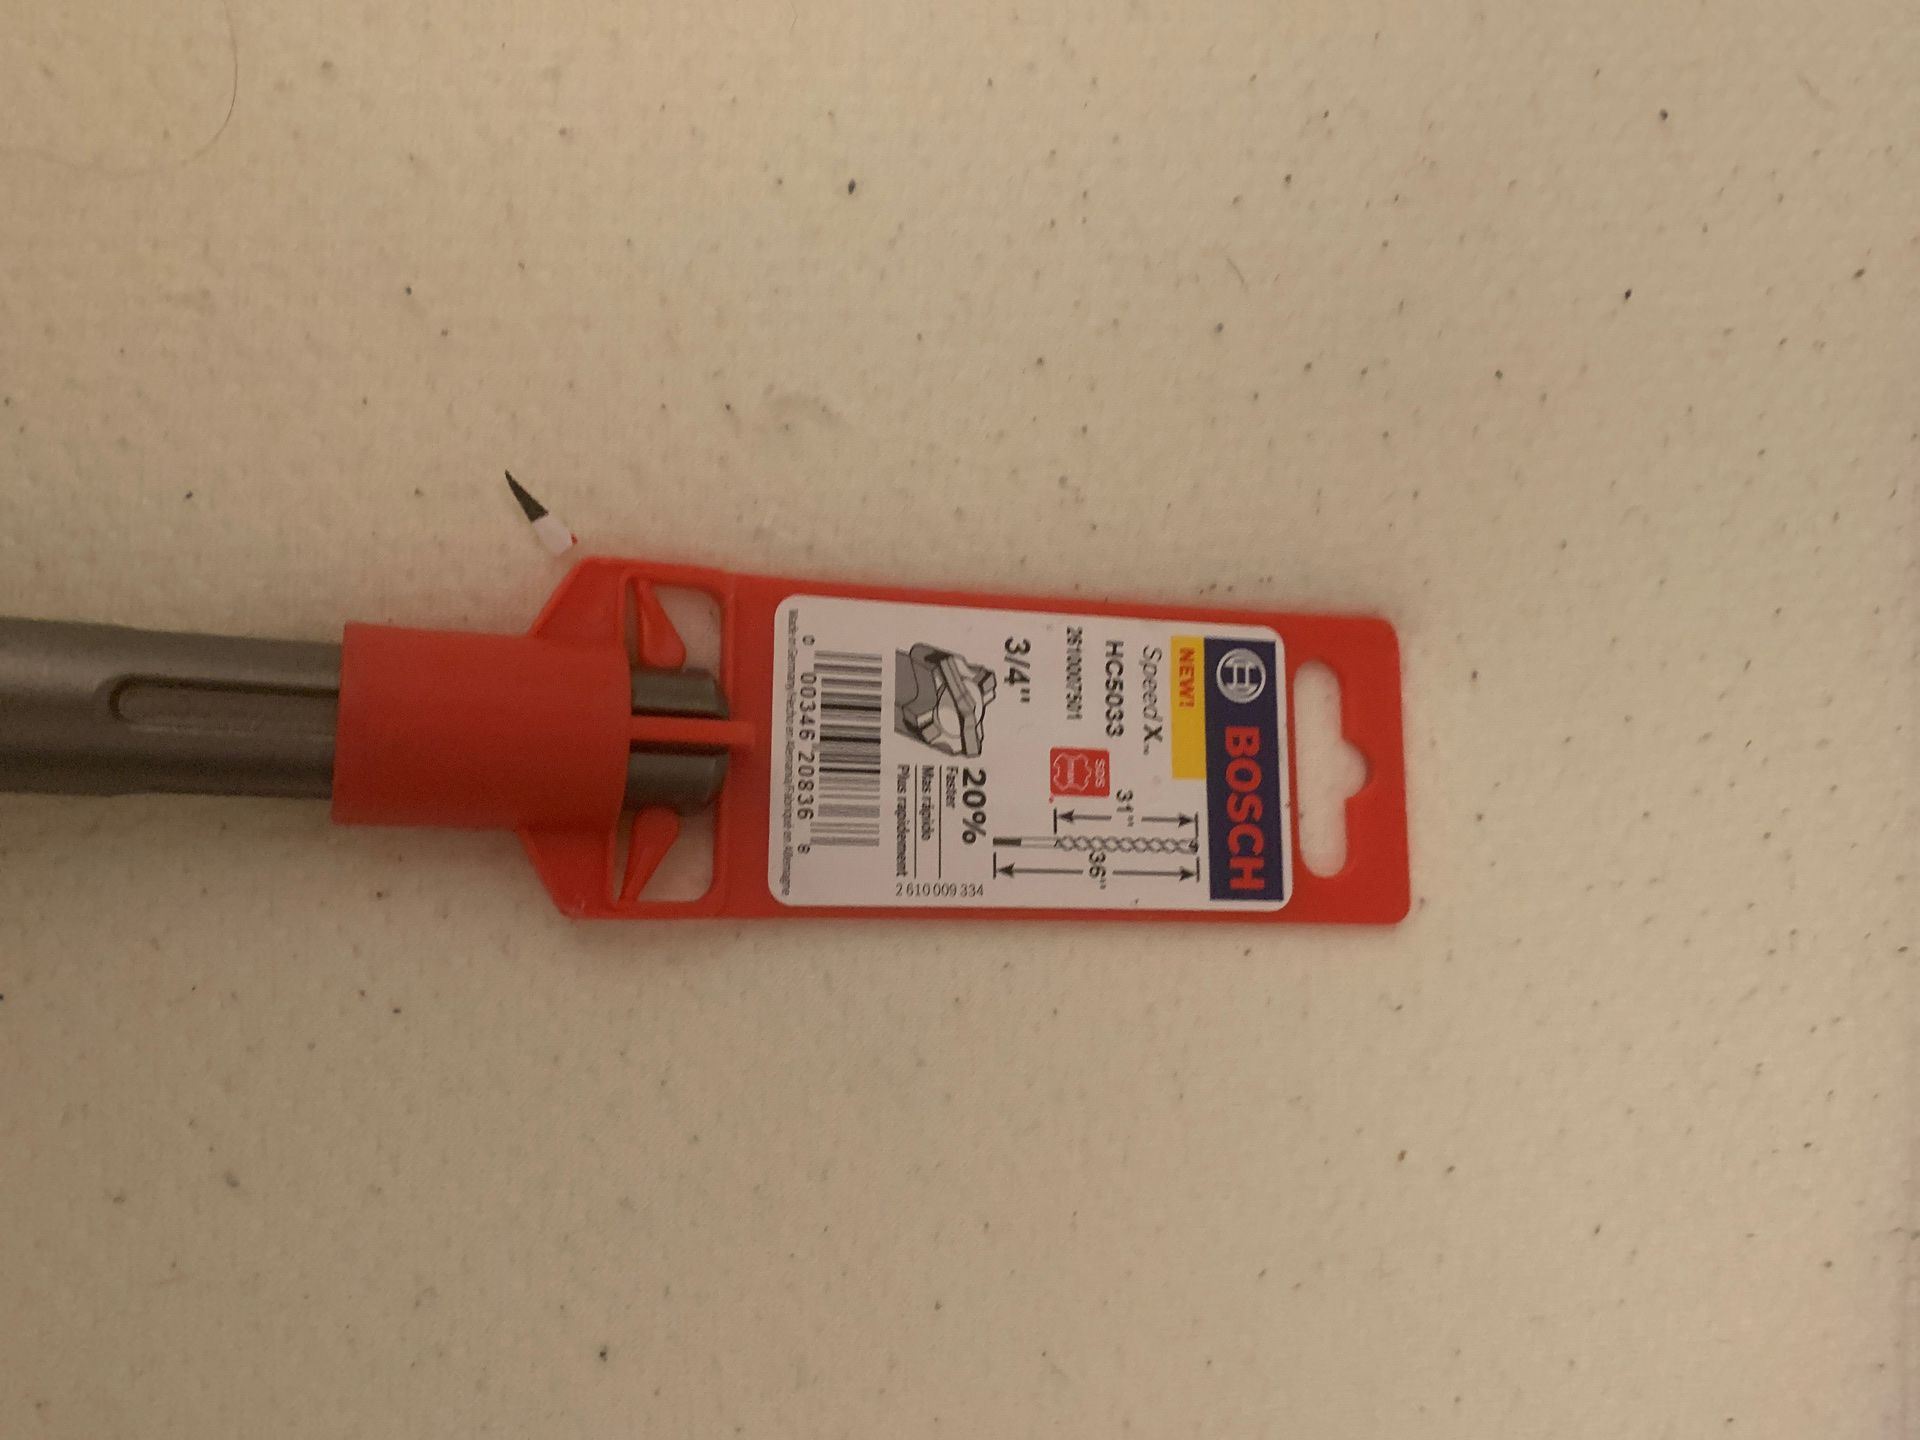 Bosch 3/4 in drill bit